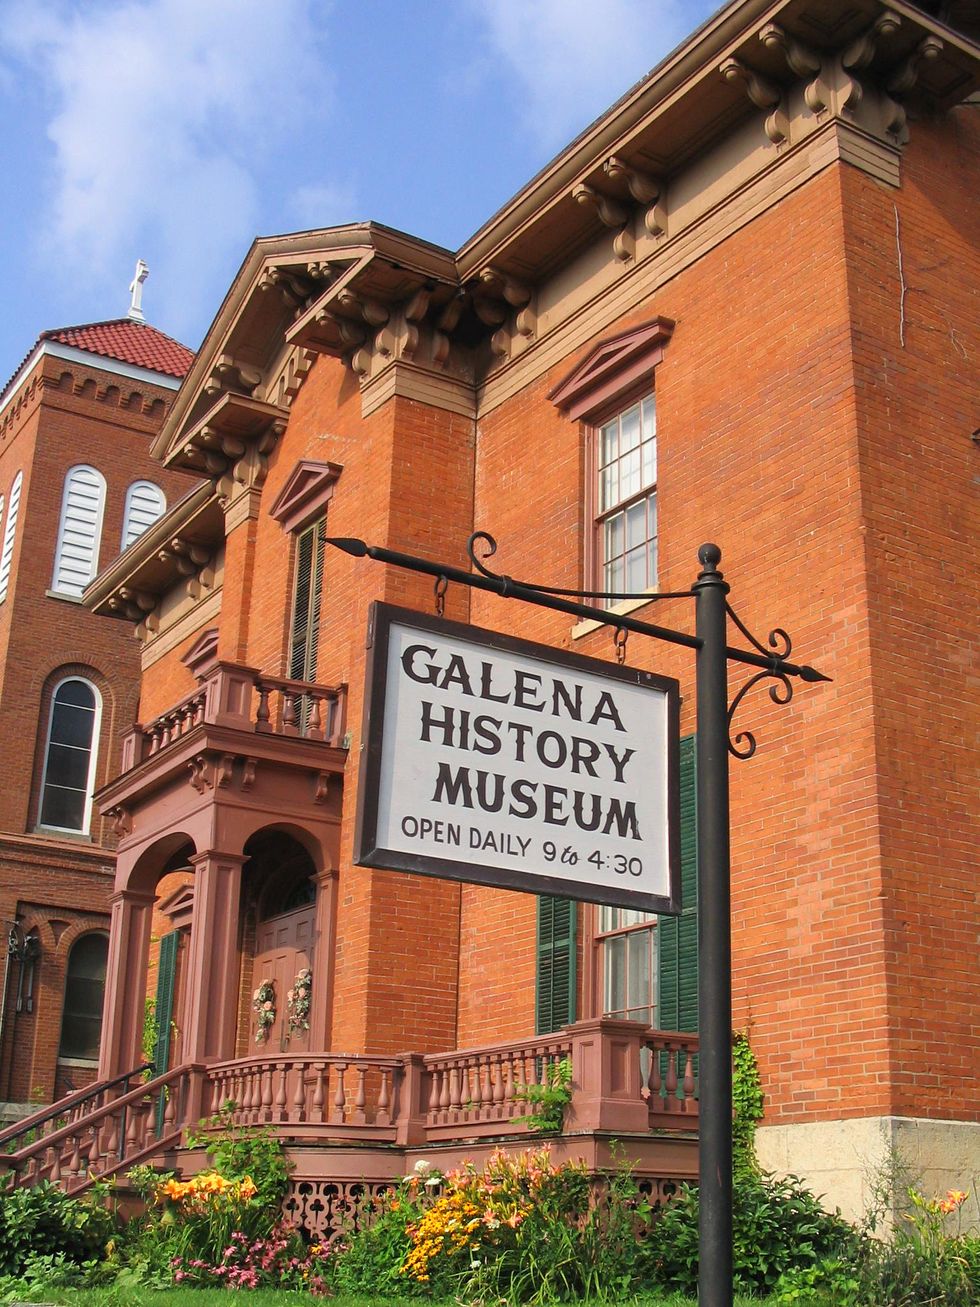 galena history museum, galena, illinois